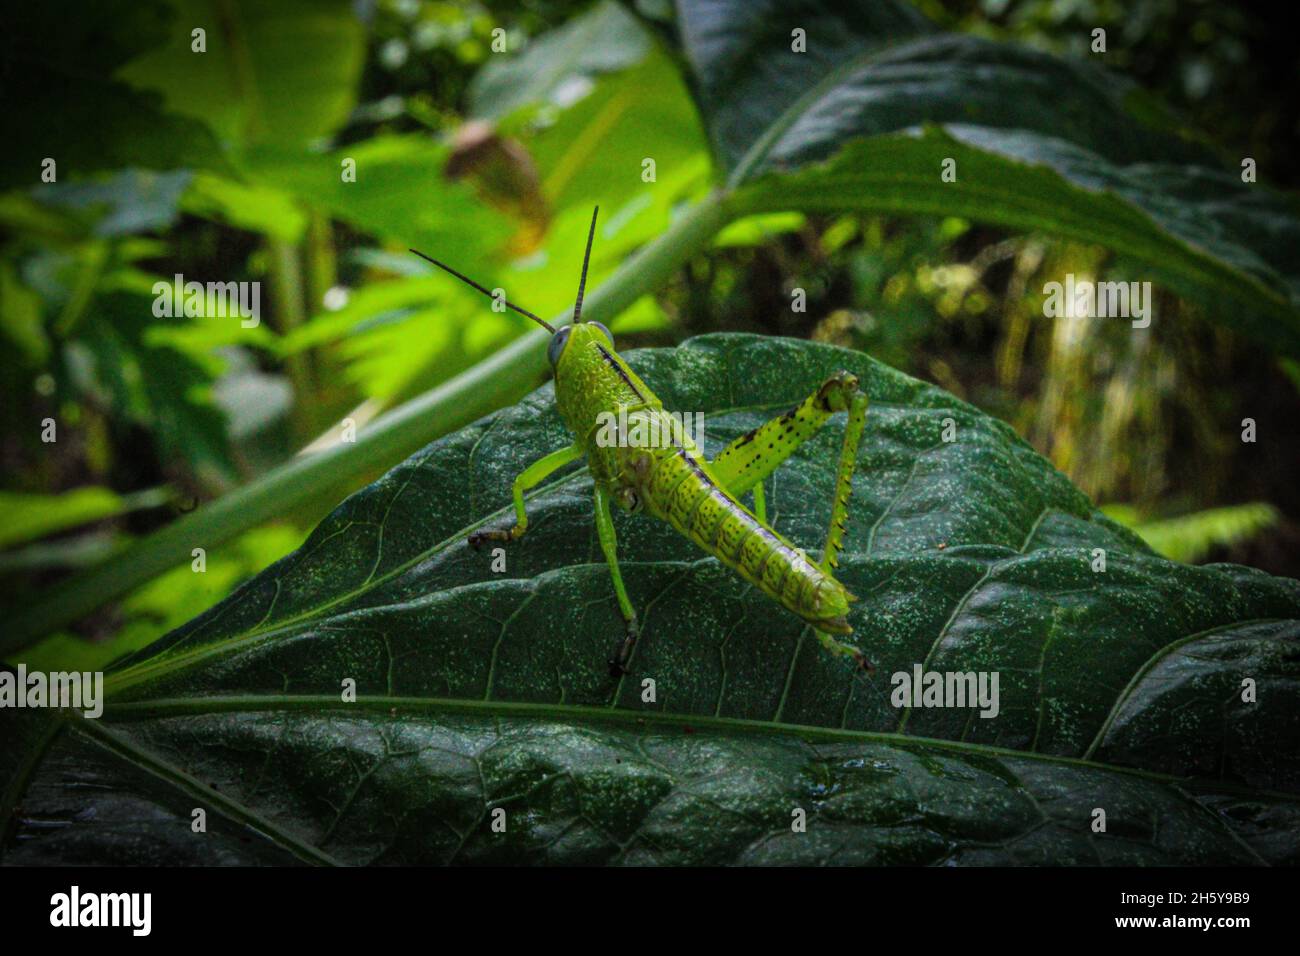 A green grasshopper on a green leaf Stock Photo